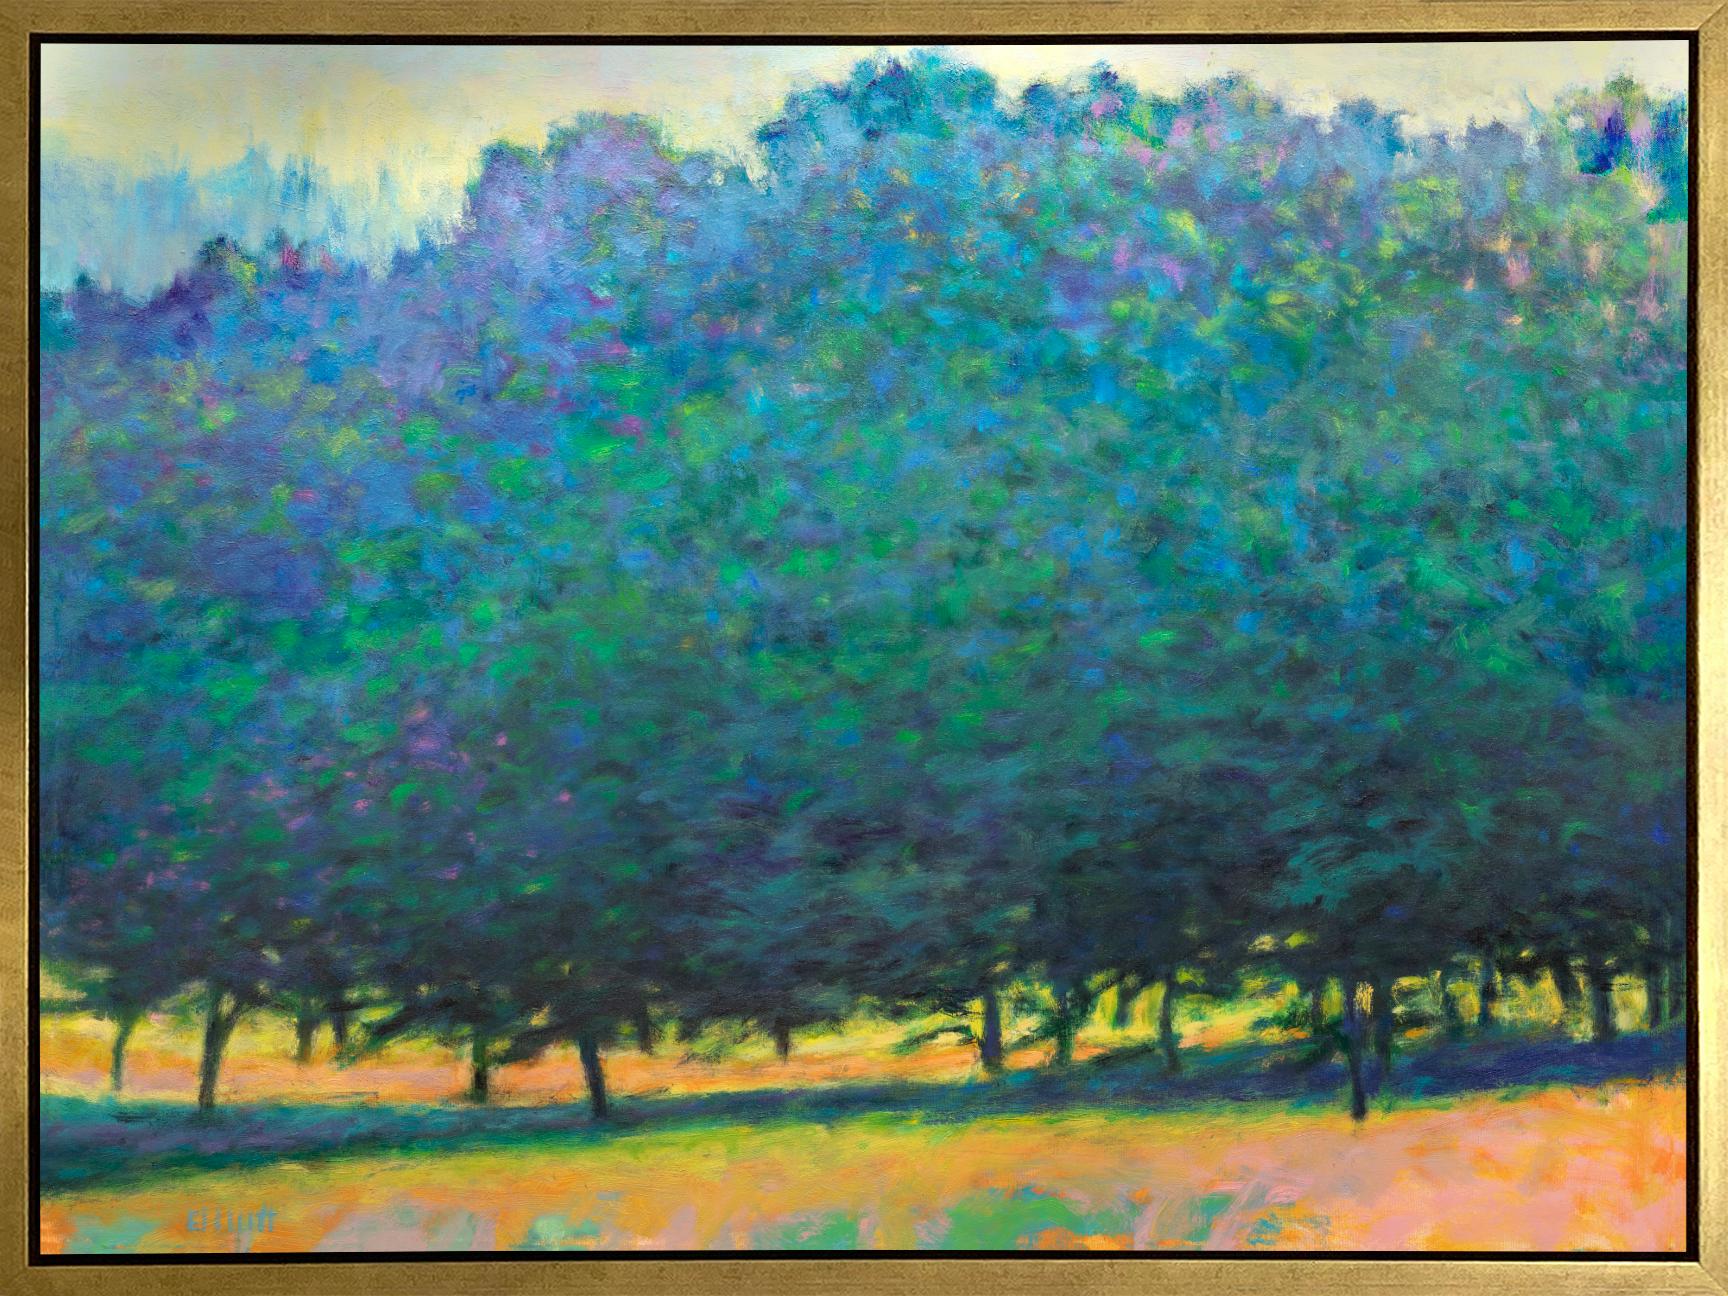 Ken Elliott Landscape Print - "Greens Moving Across, " Framed Limited Edition Giclee Print, 36" x 48"